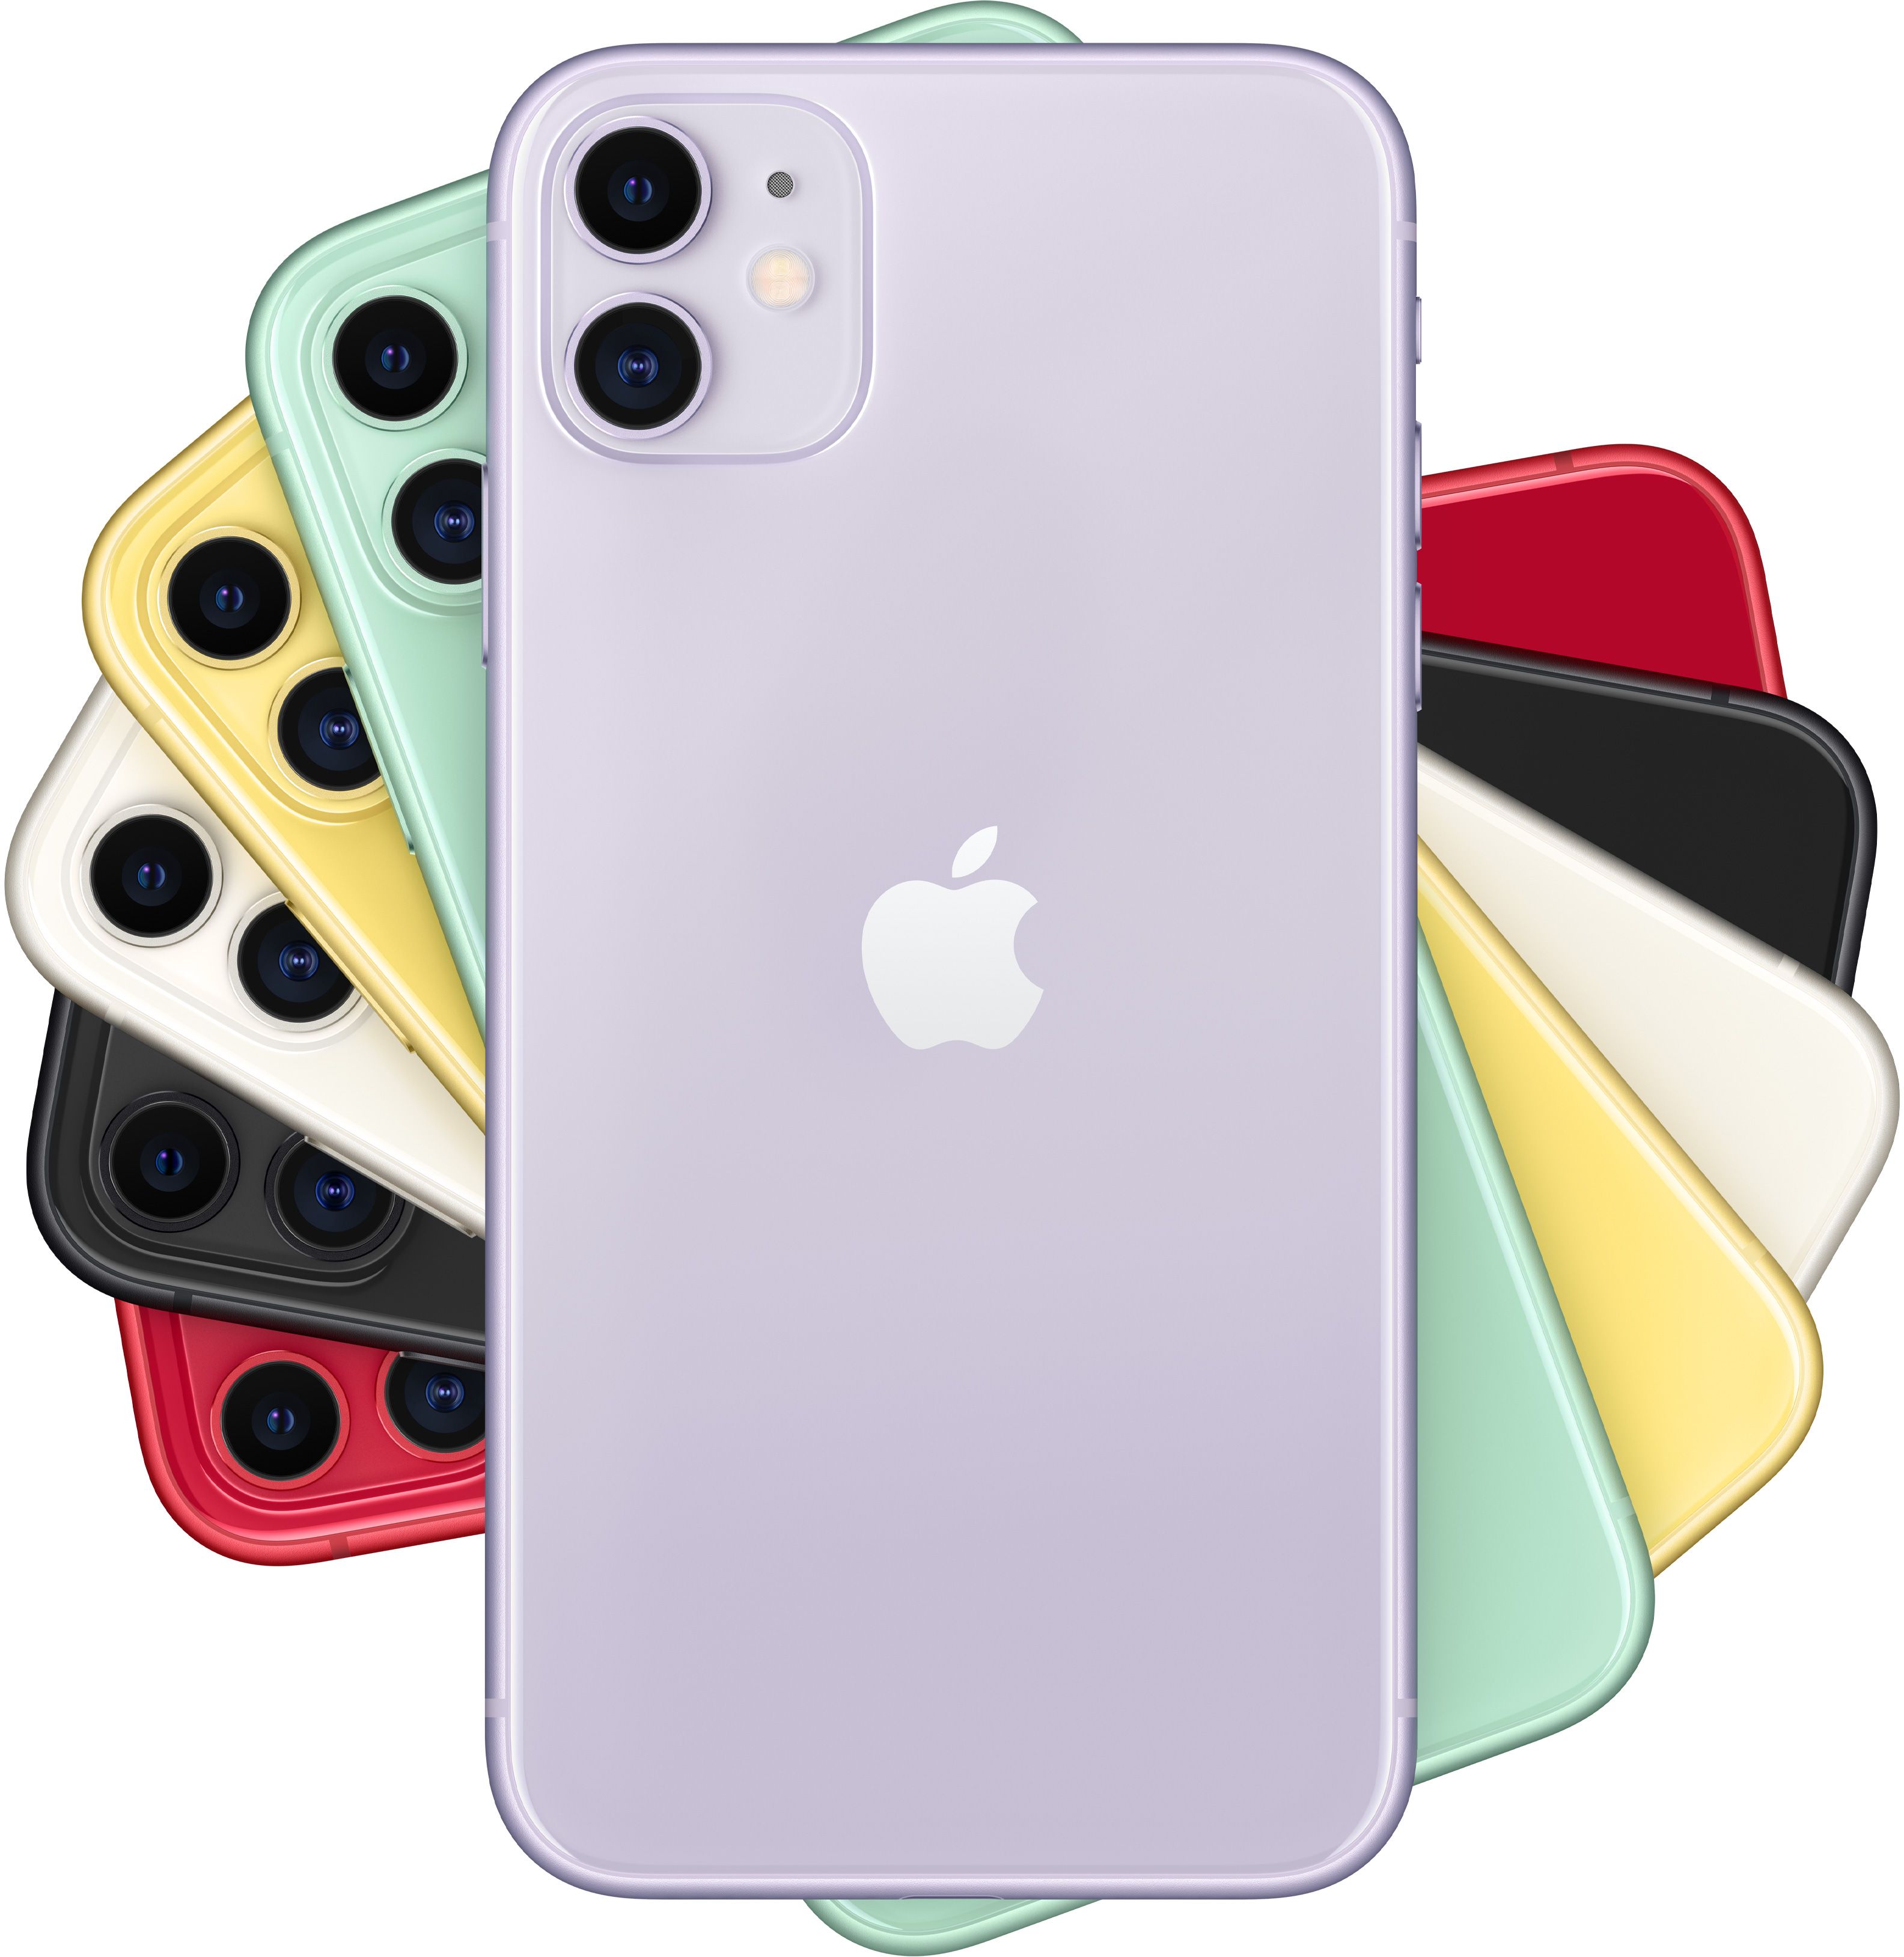 Apple iPhone 11 128GB purple